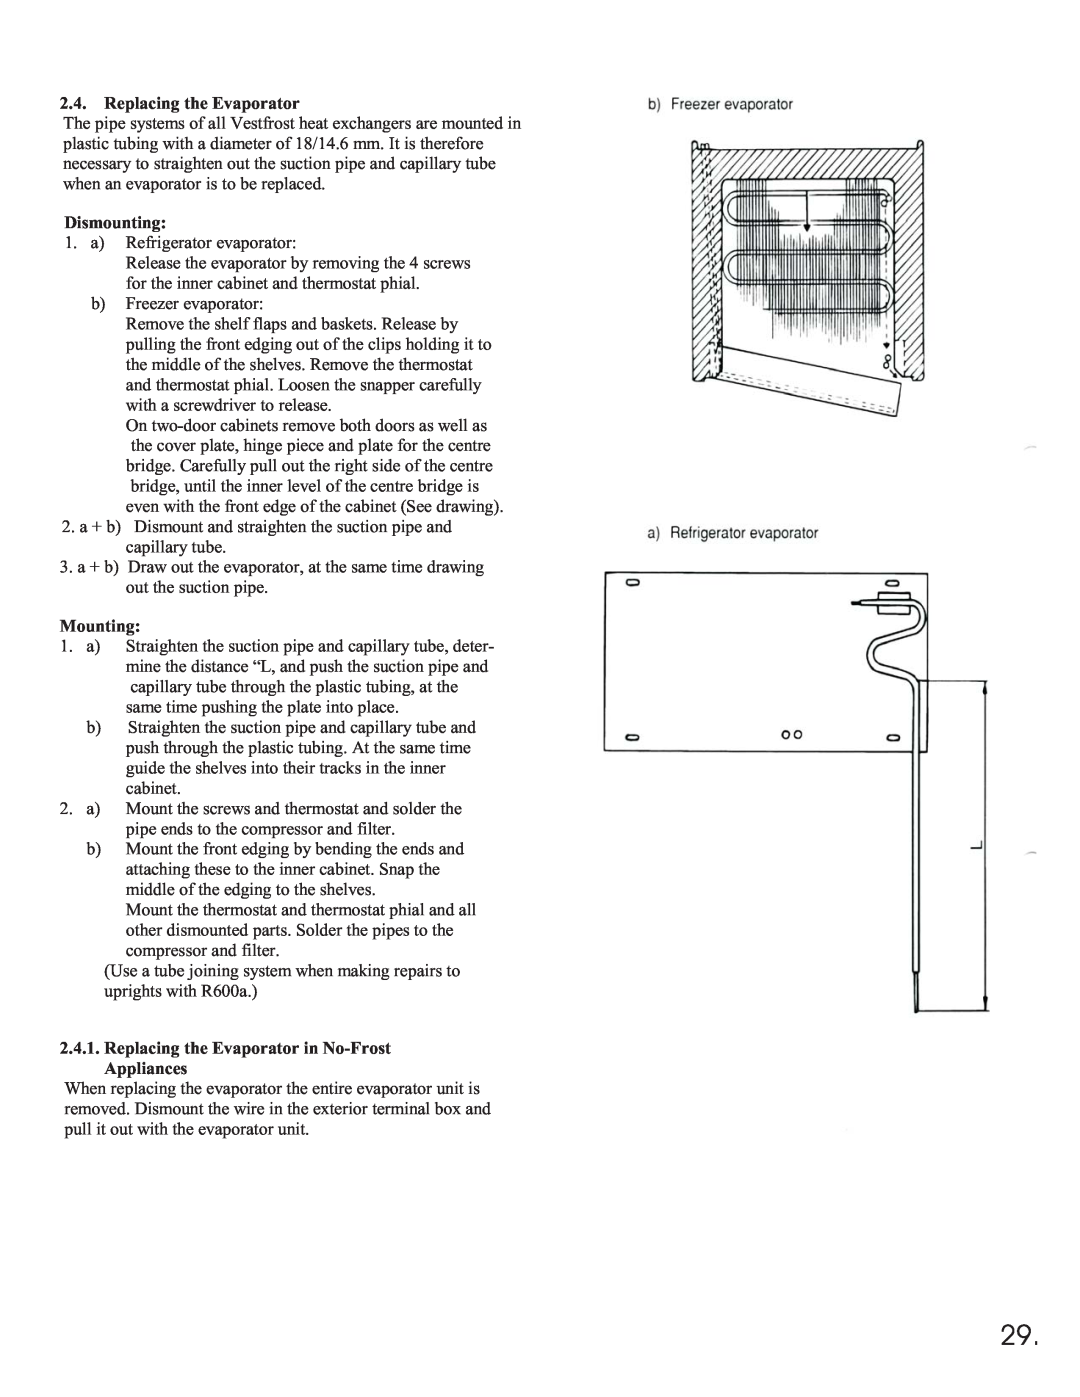 Equator 375 service manual Replacing the Evaporator, Dismounting, Mounting 